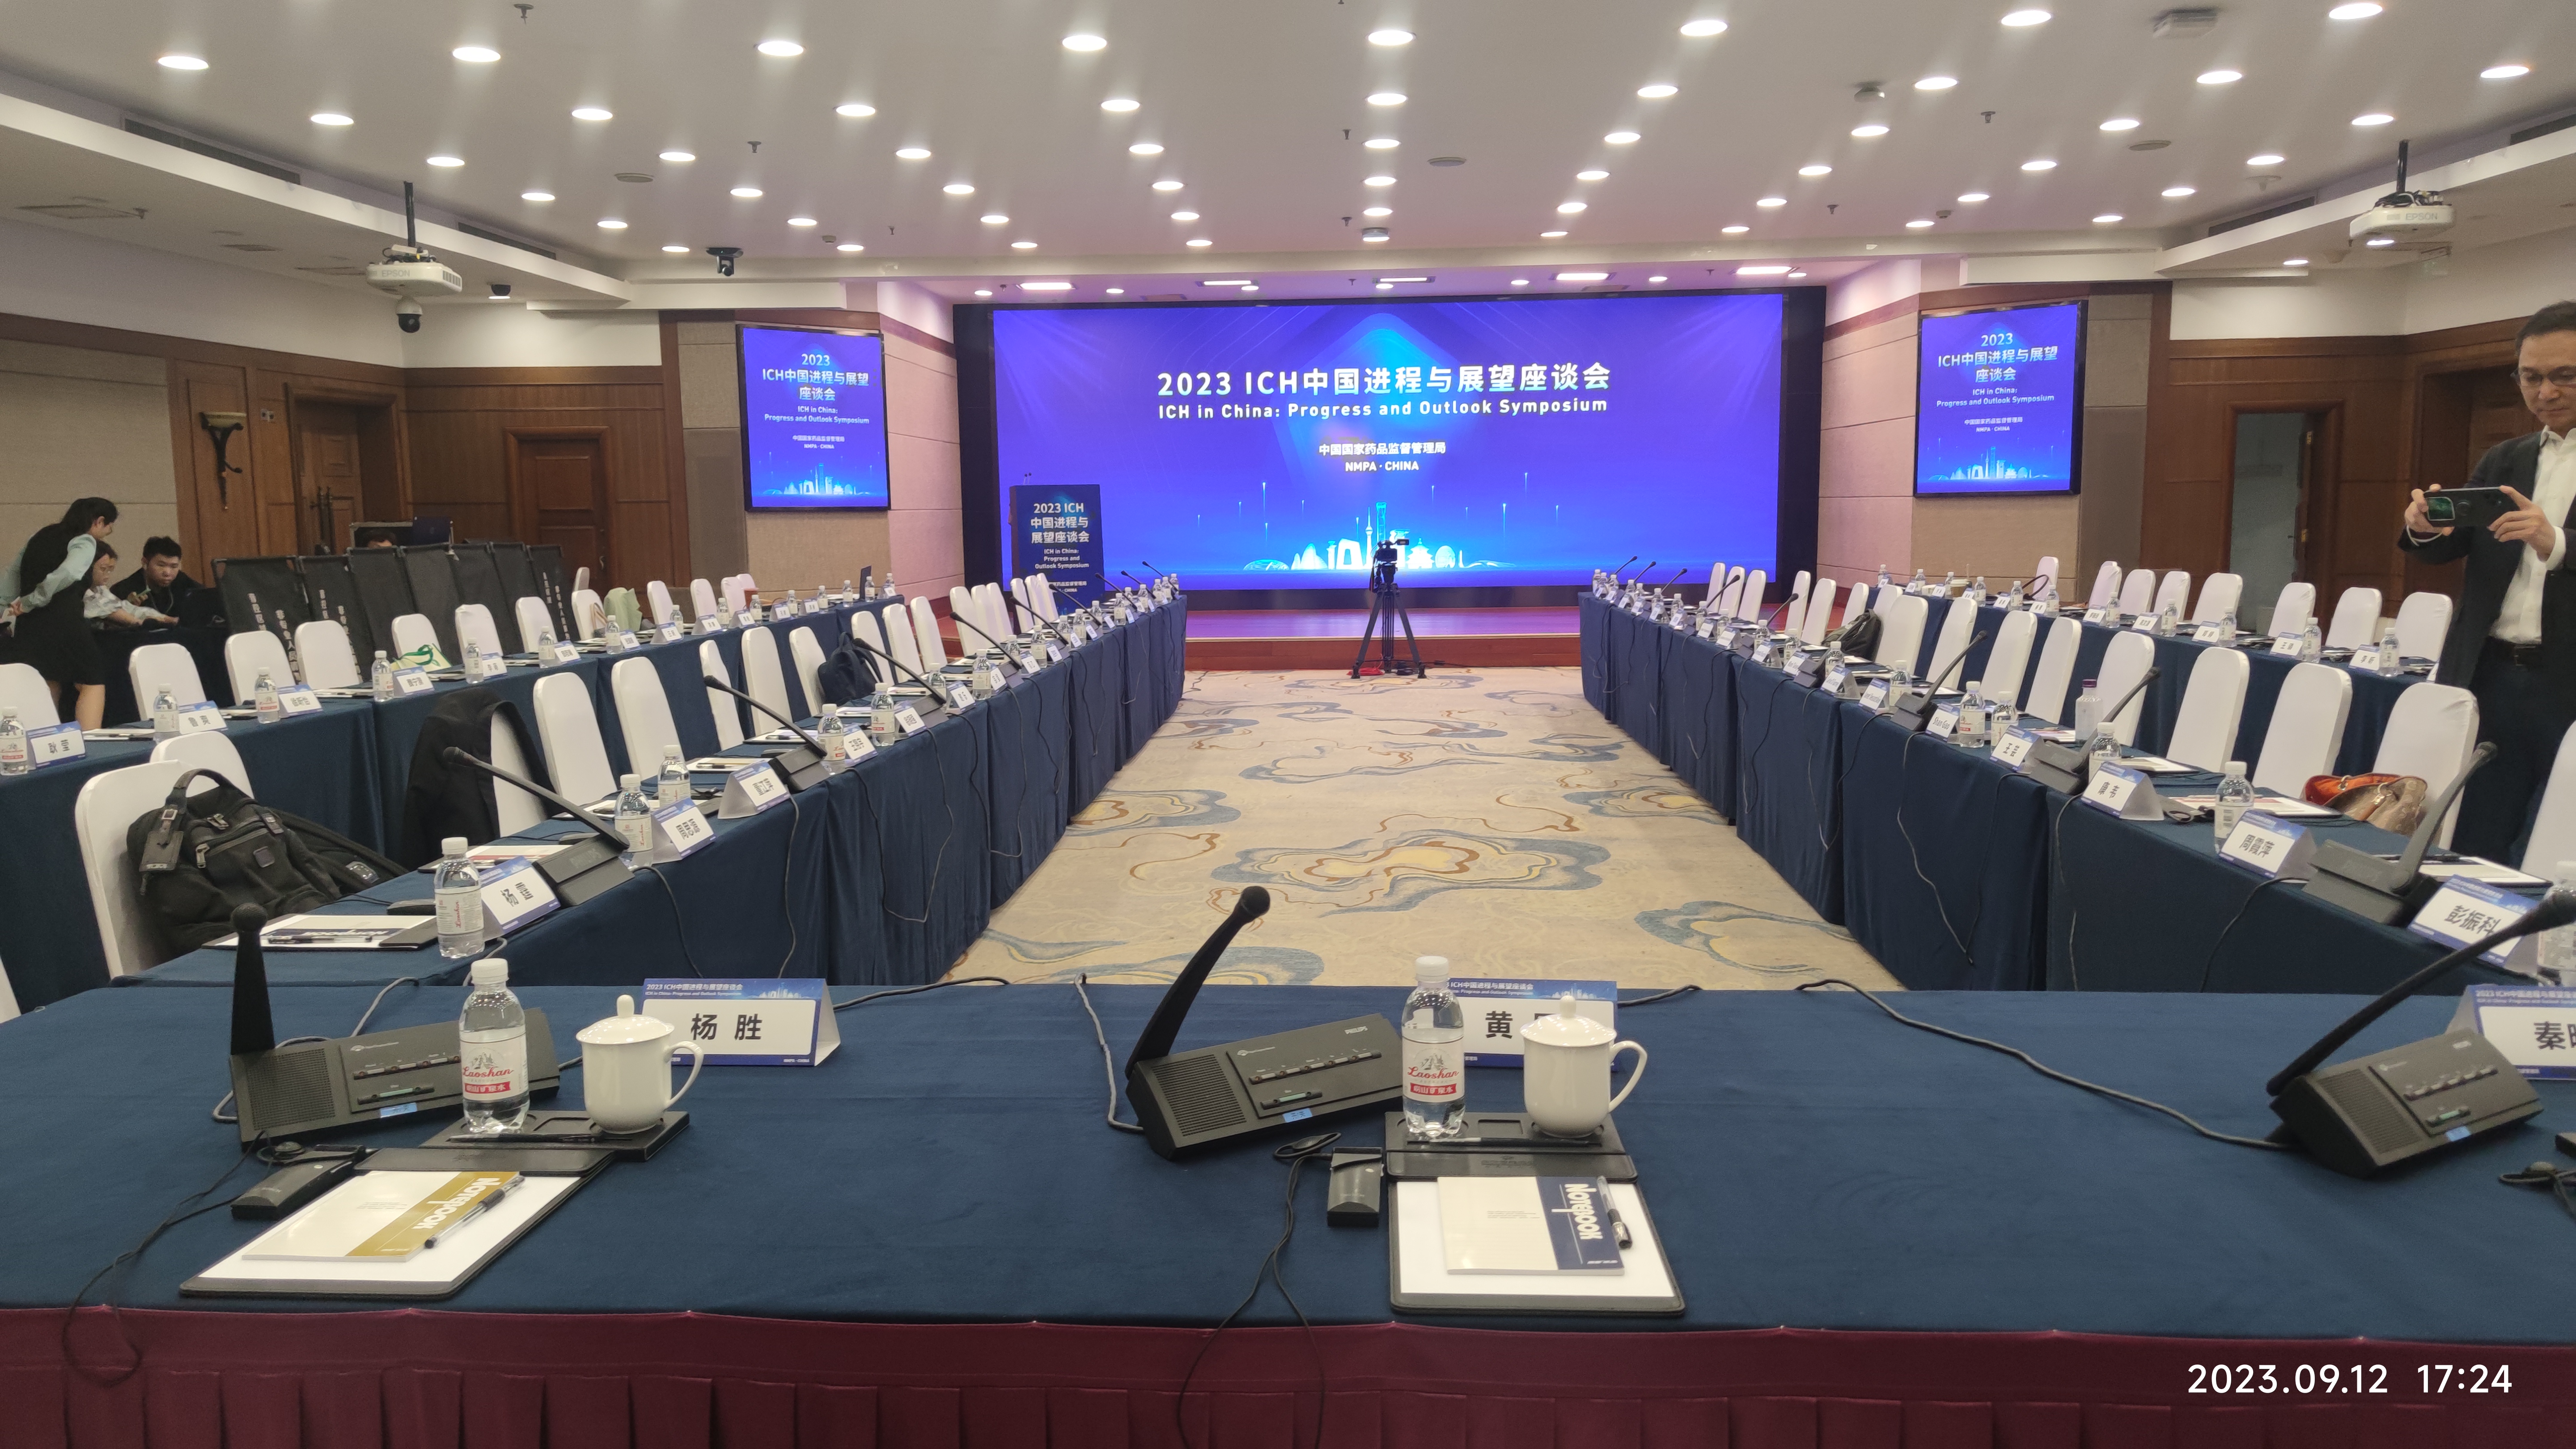 2023ICH中国进程与展望座谈会